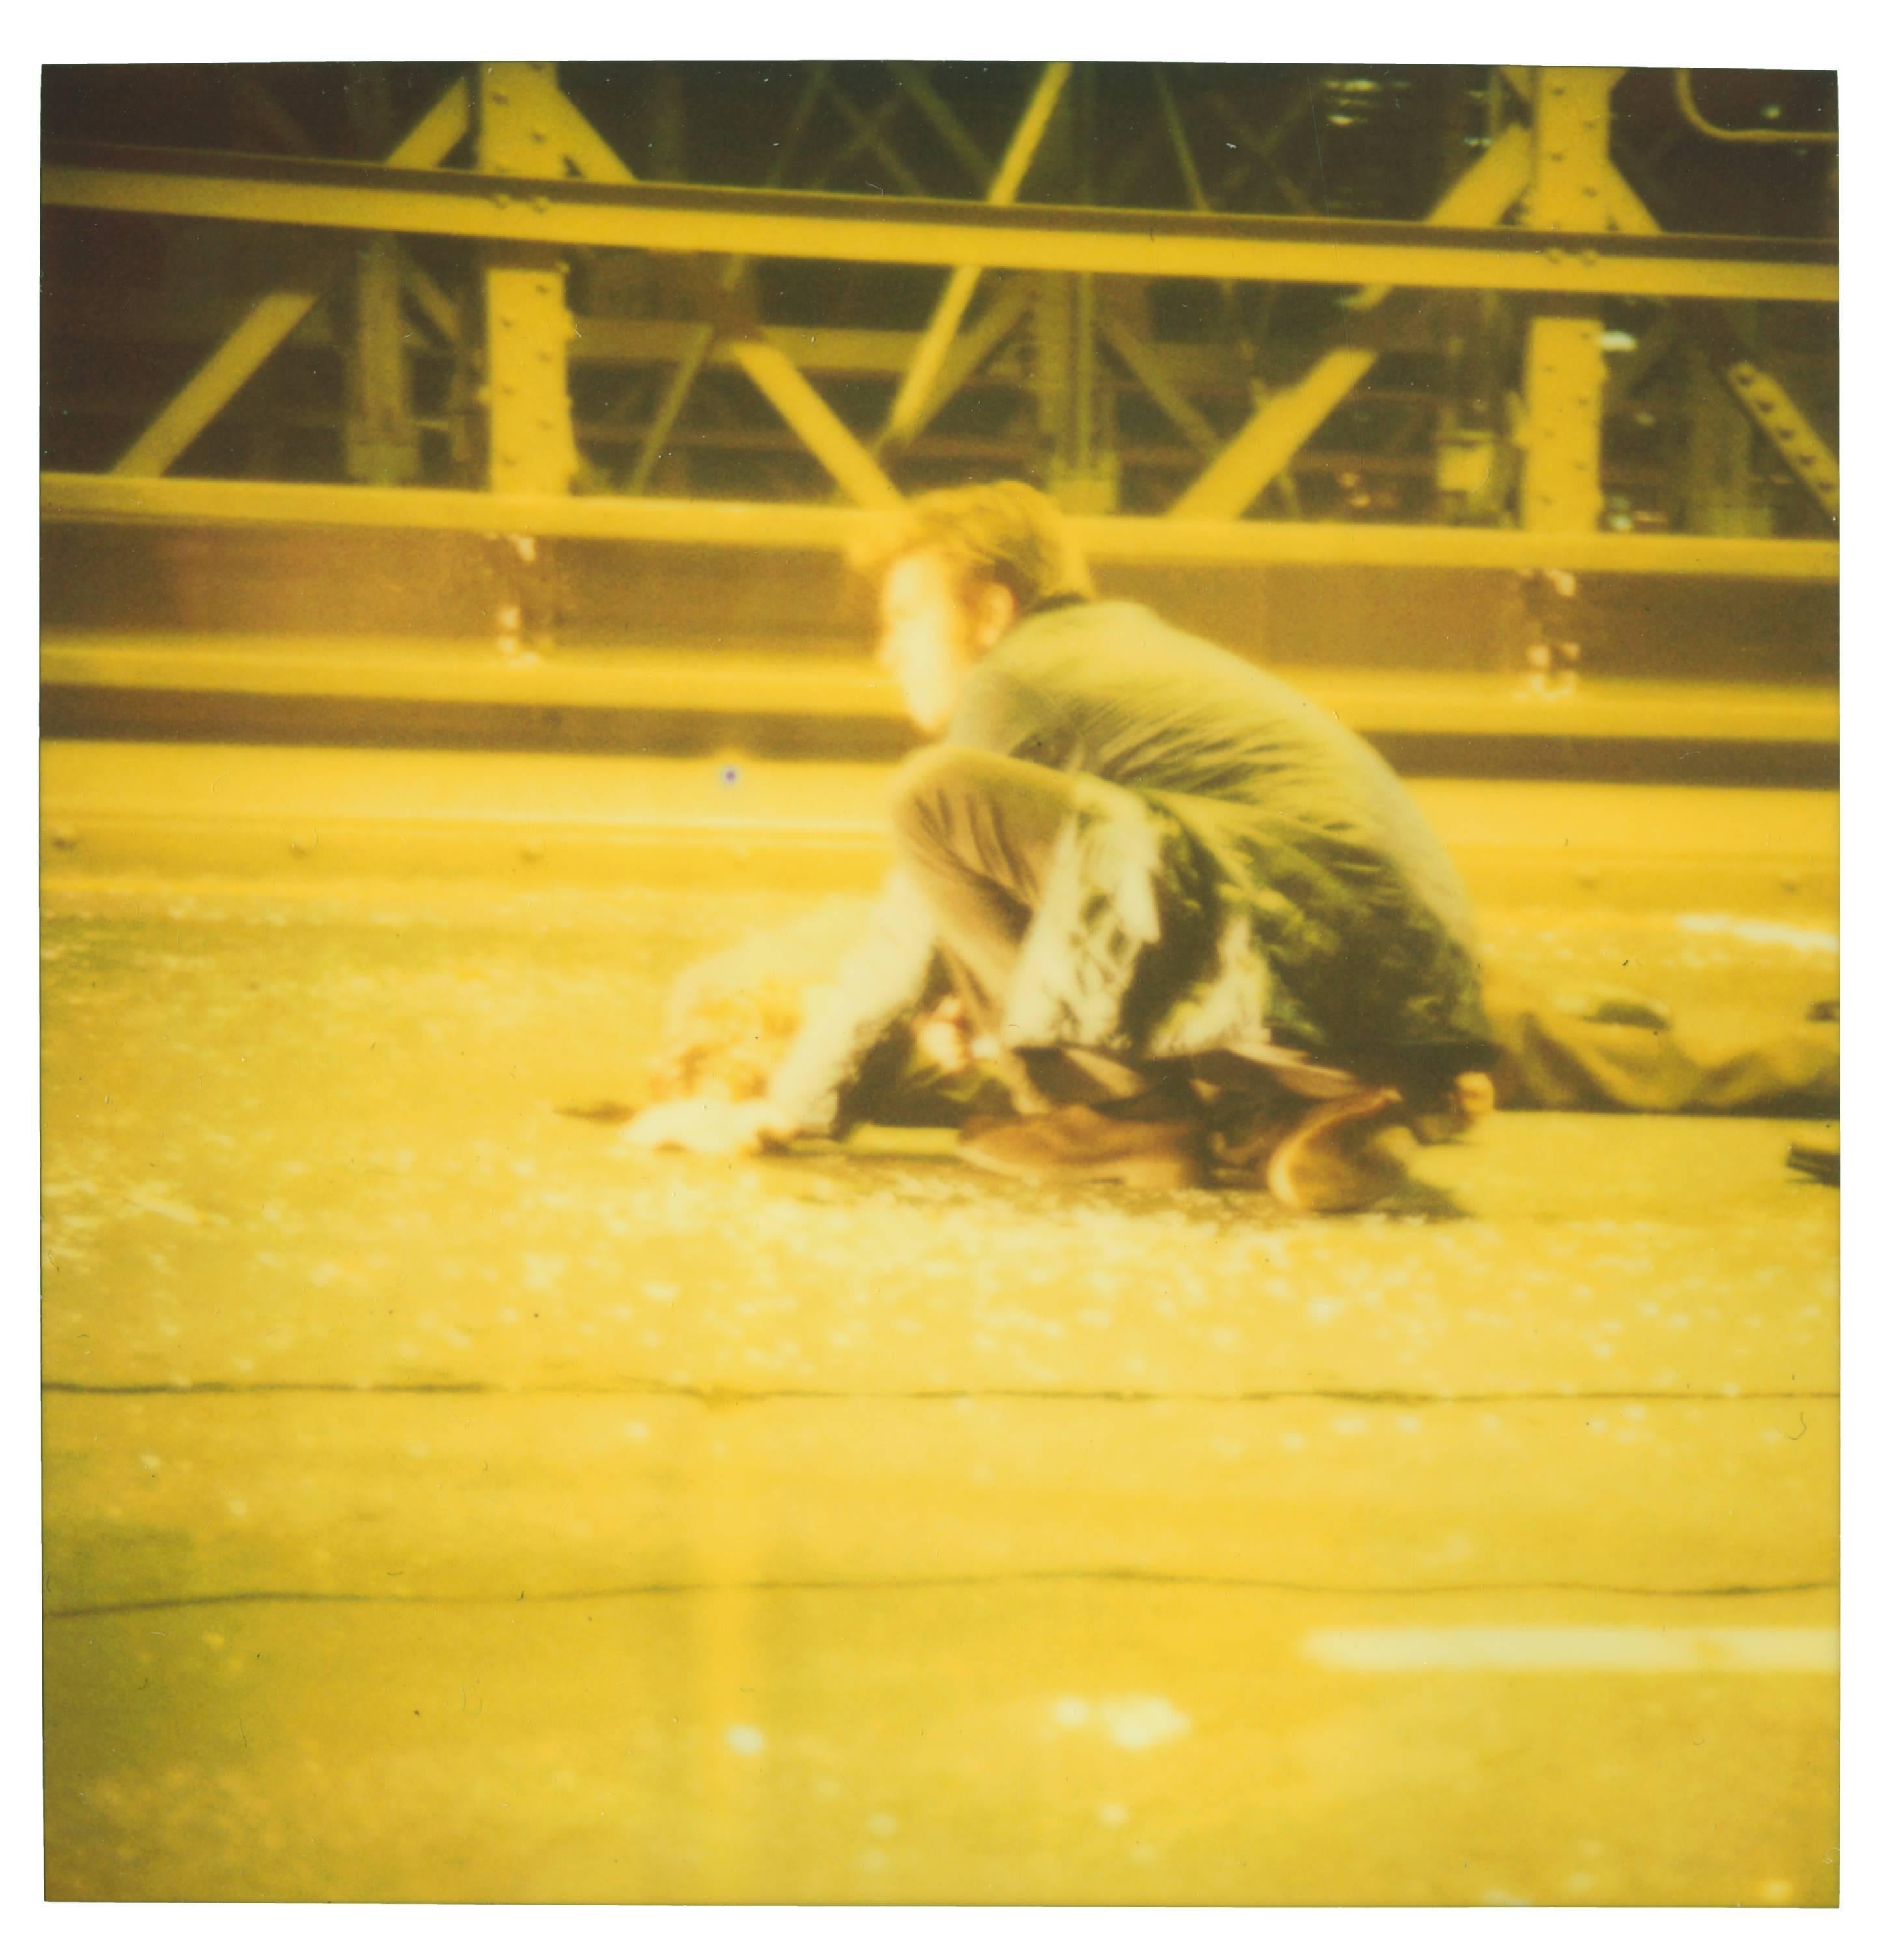 Stefanie Schneider Figurative Photograph - Accident II - with Ewan McGregor and Ryan Gosling, Polaroid, 21st Century, Color